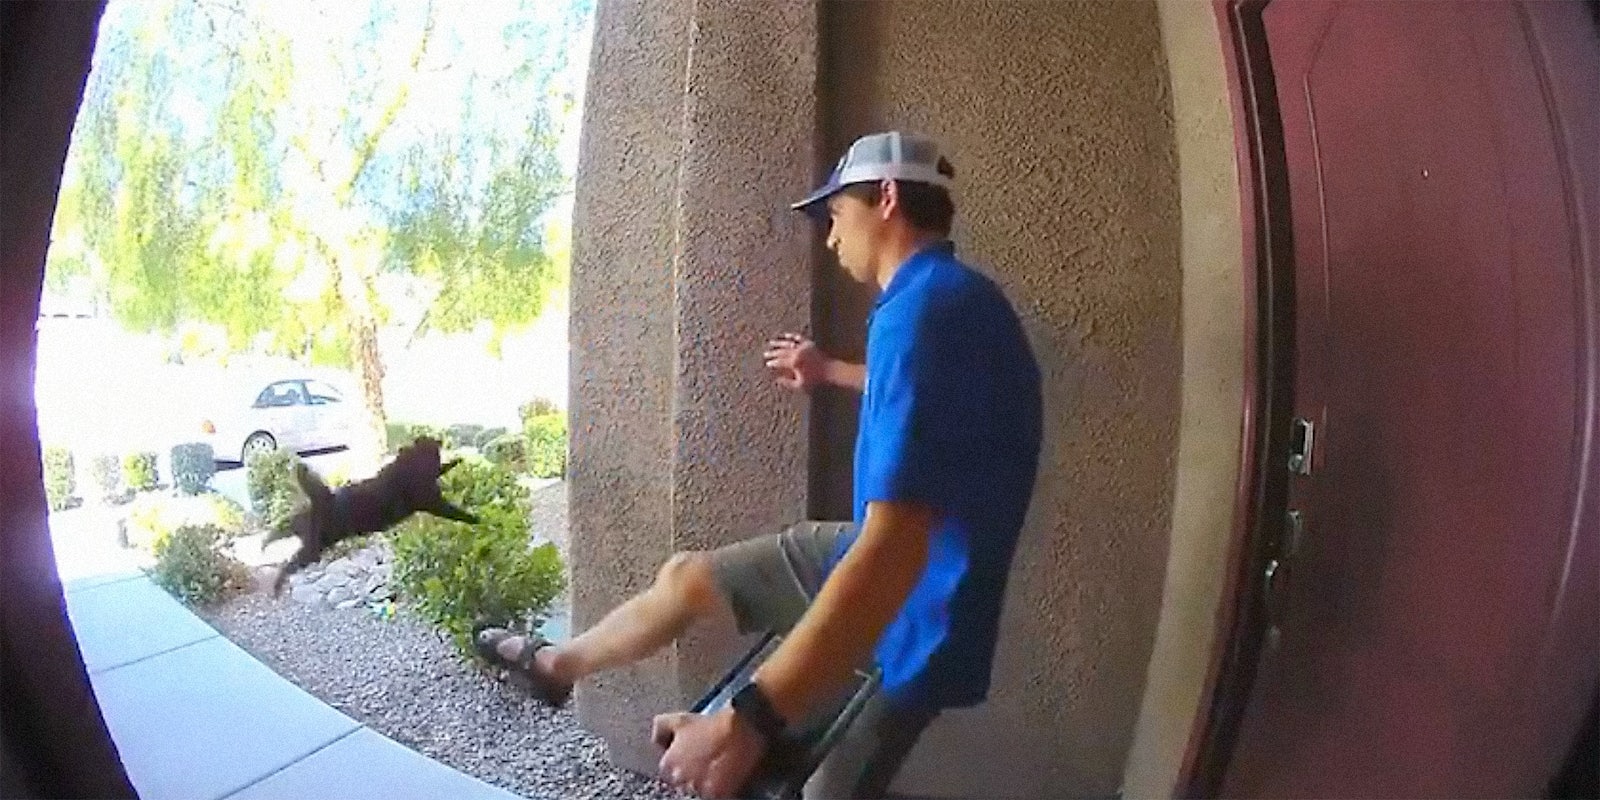 A man kicking on a cat off of a porch.